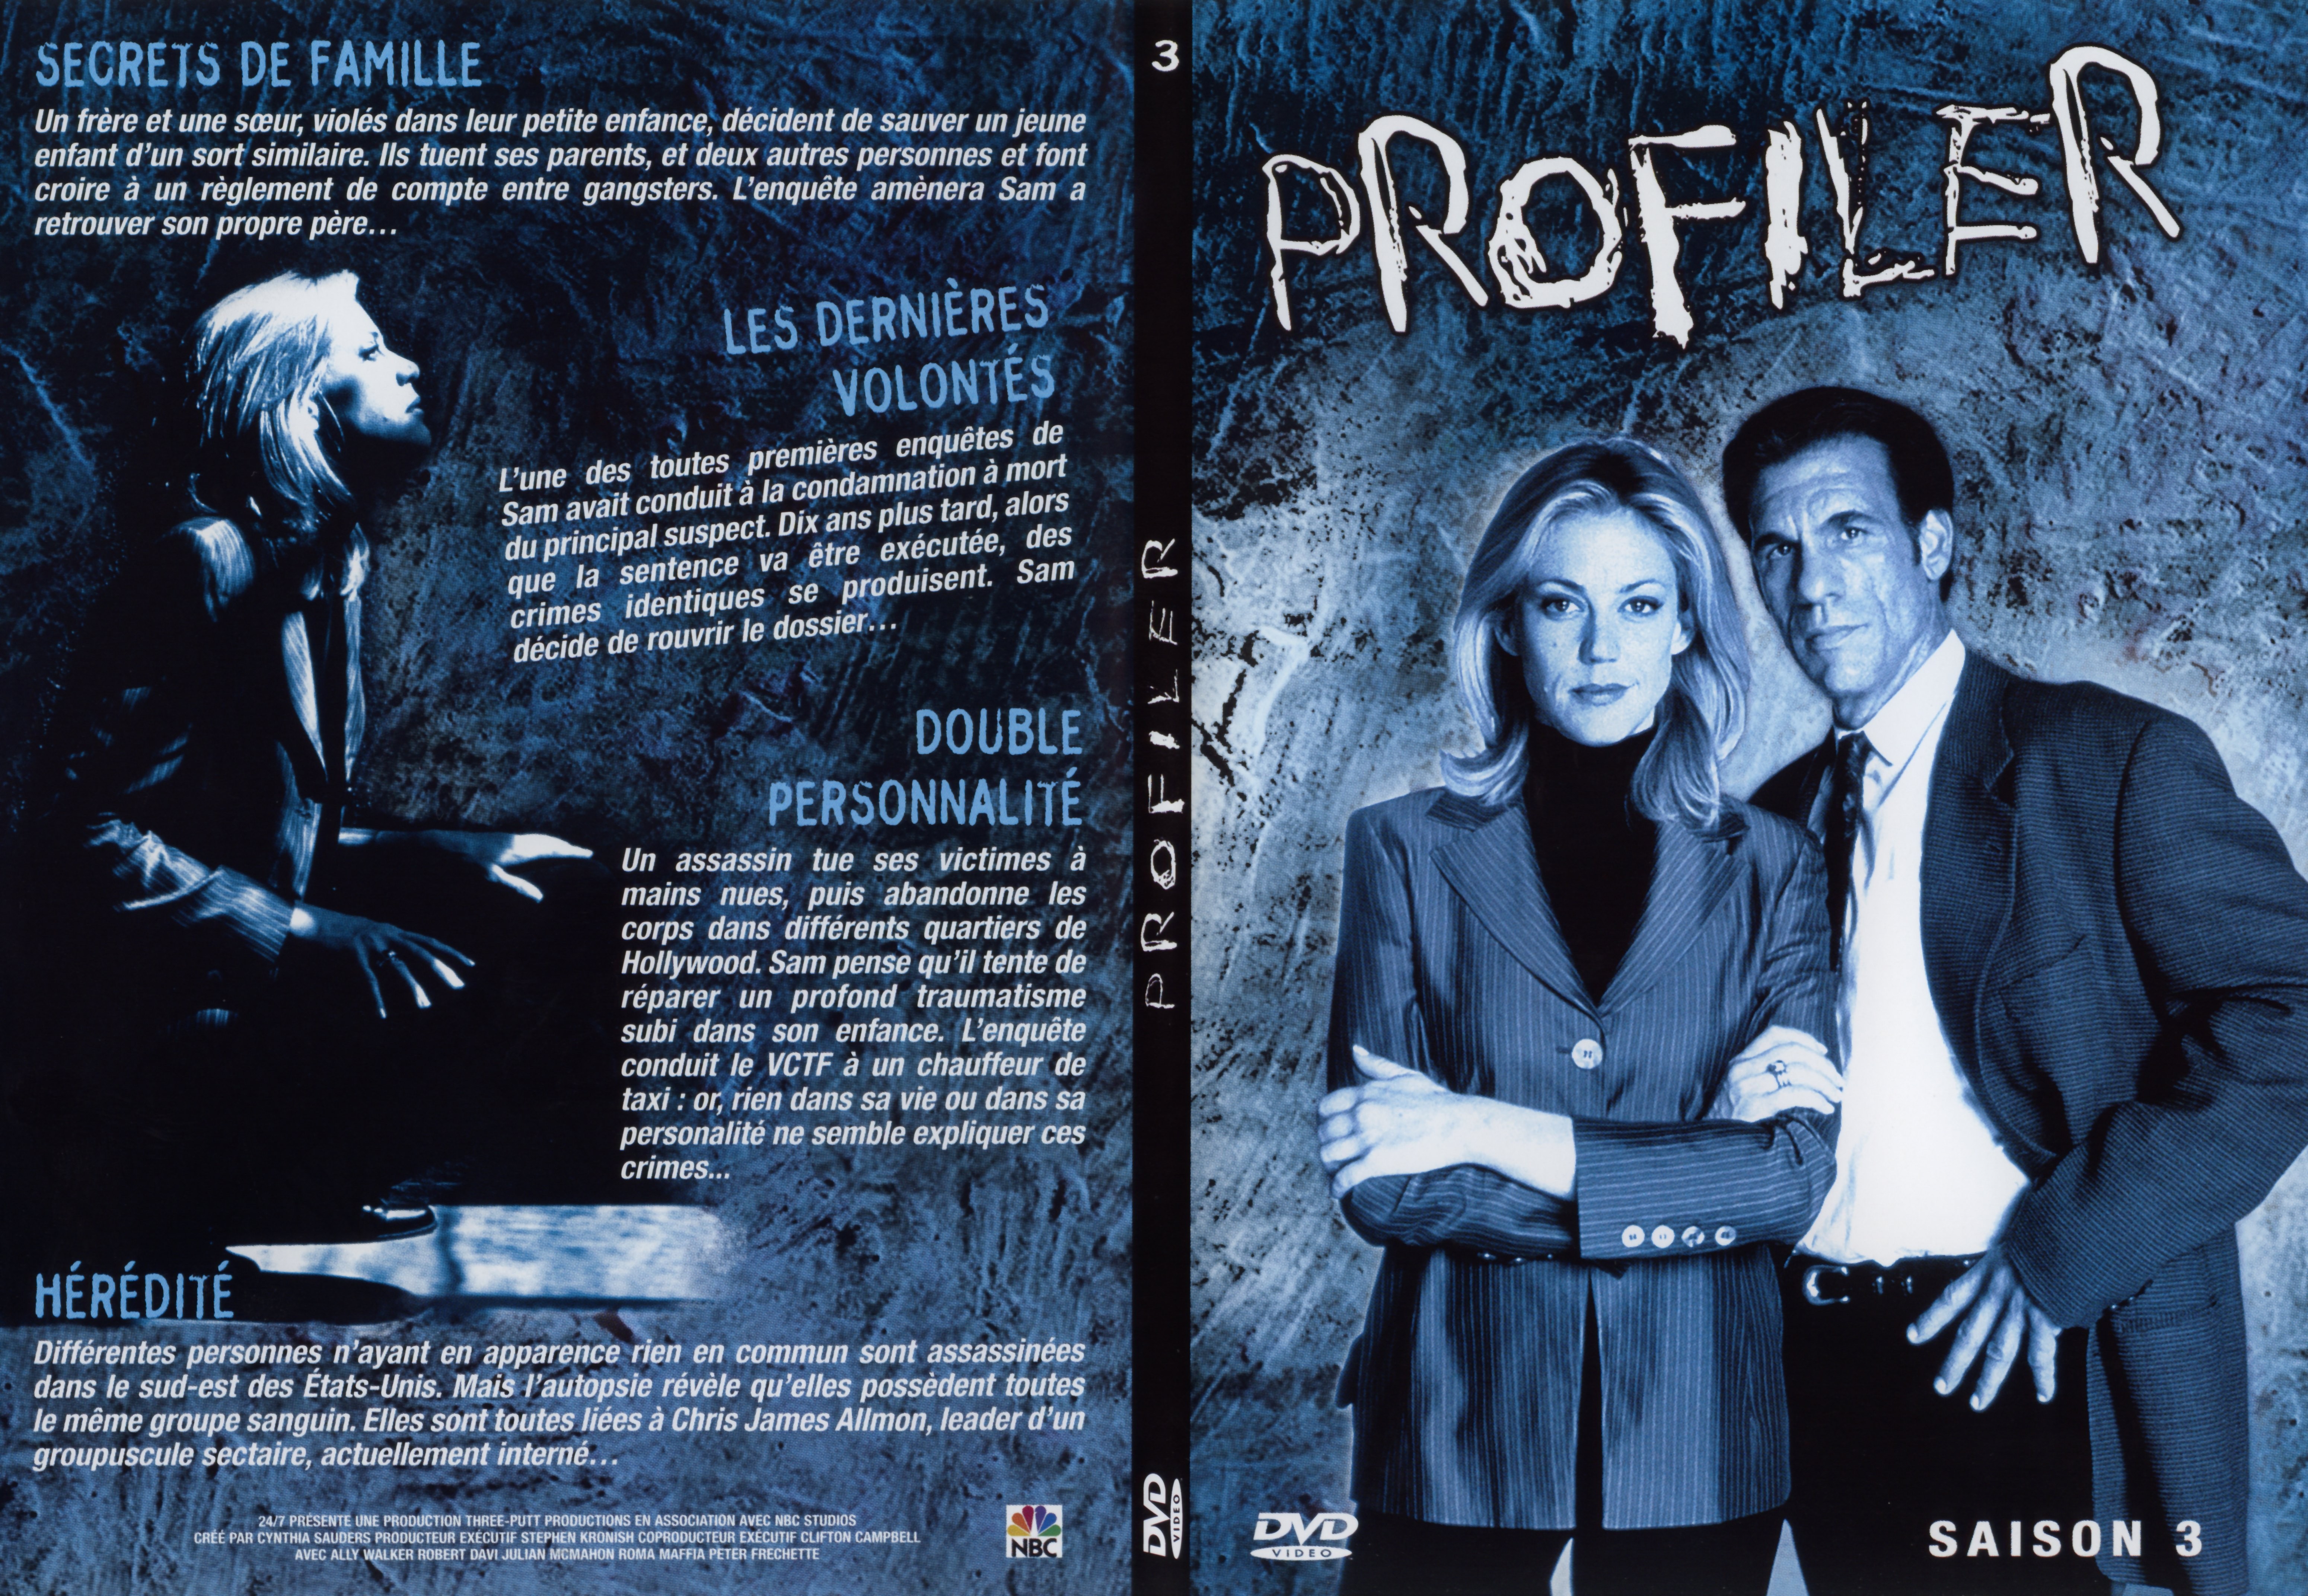 Jaquette DVD Profiler saison 3 DVD 3